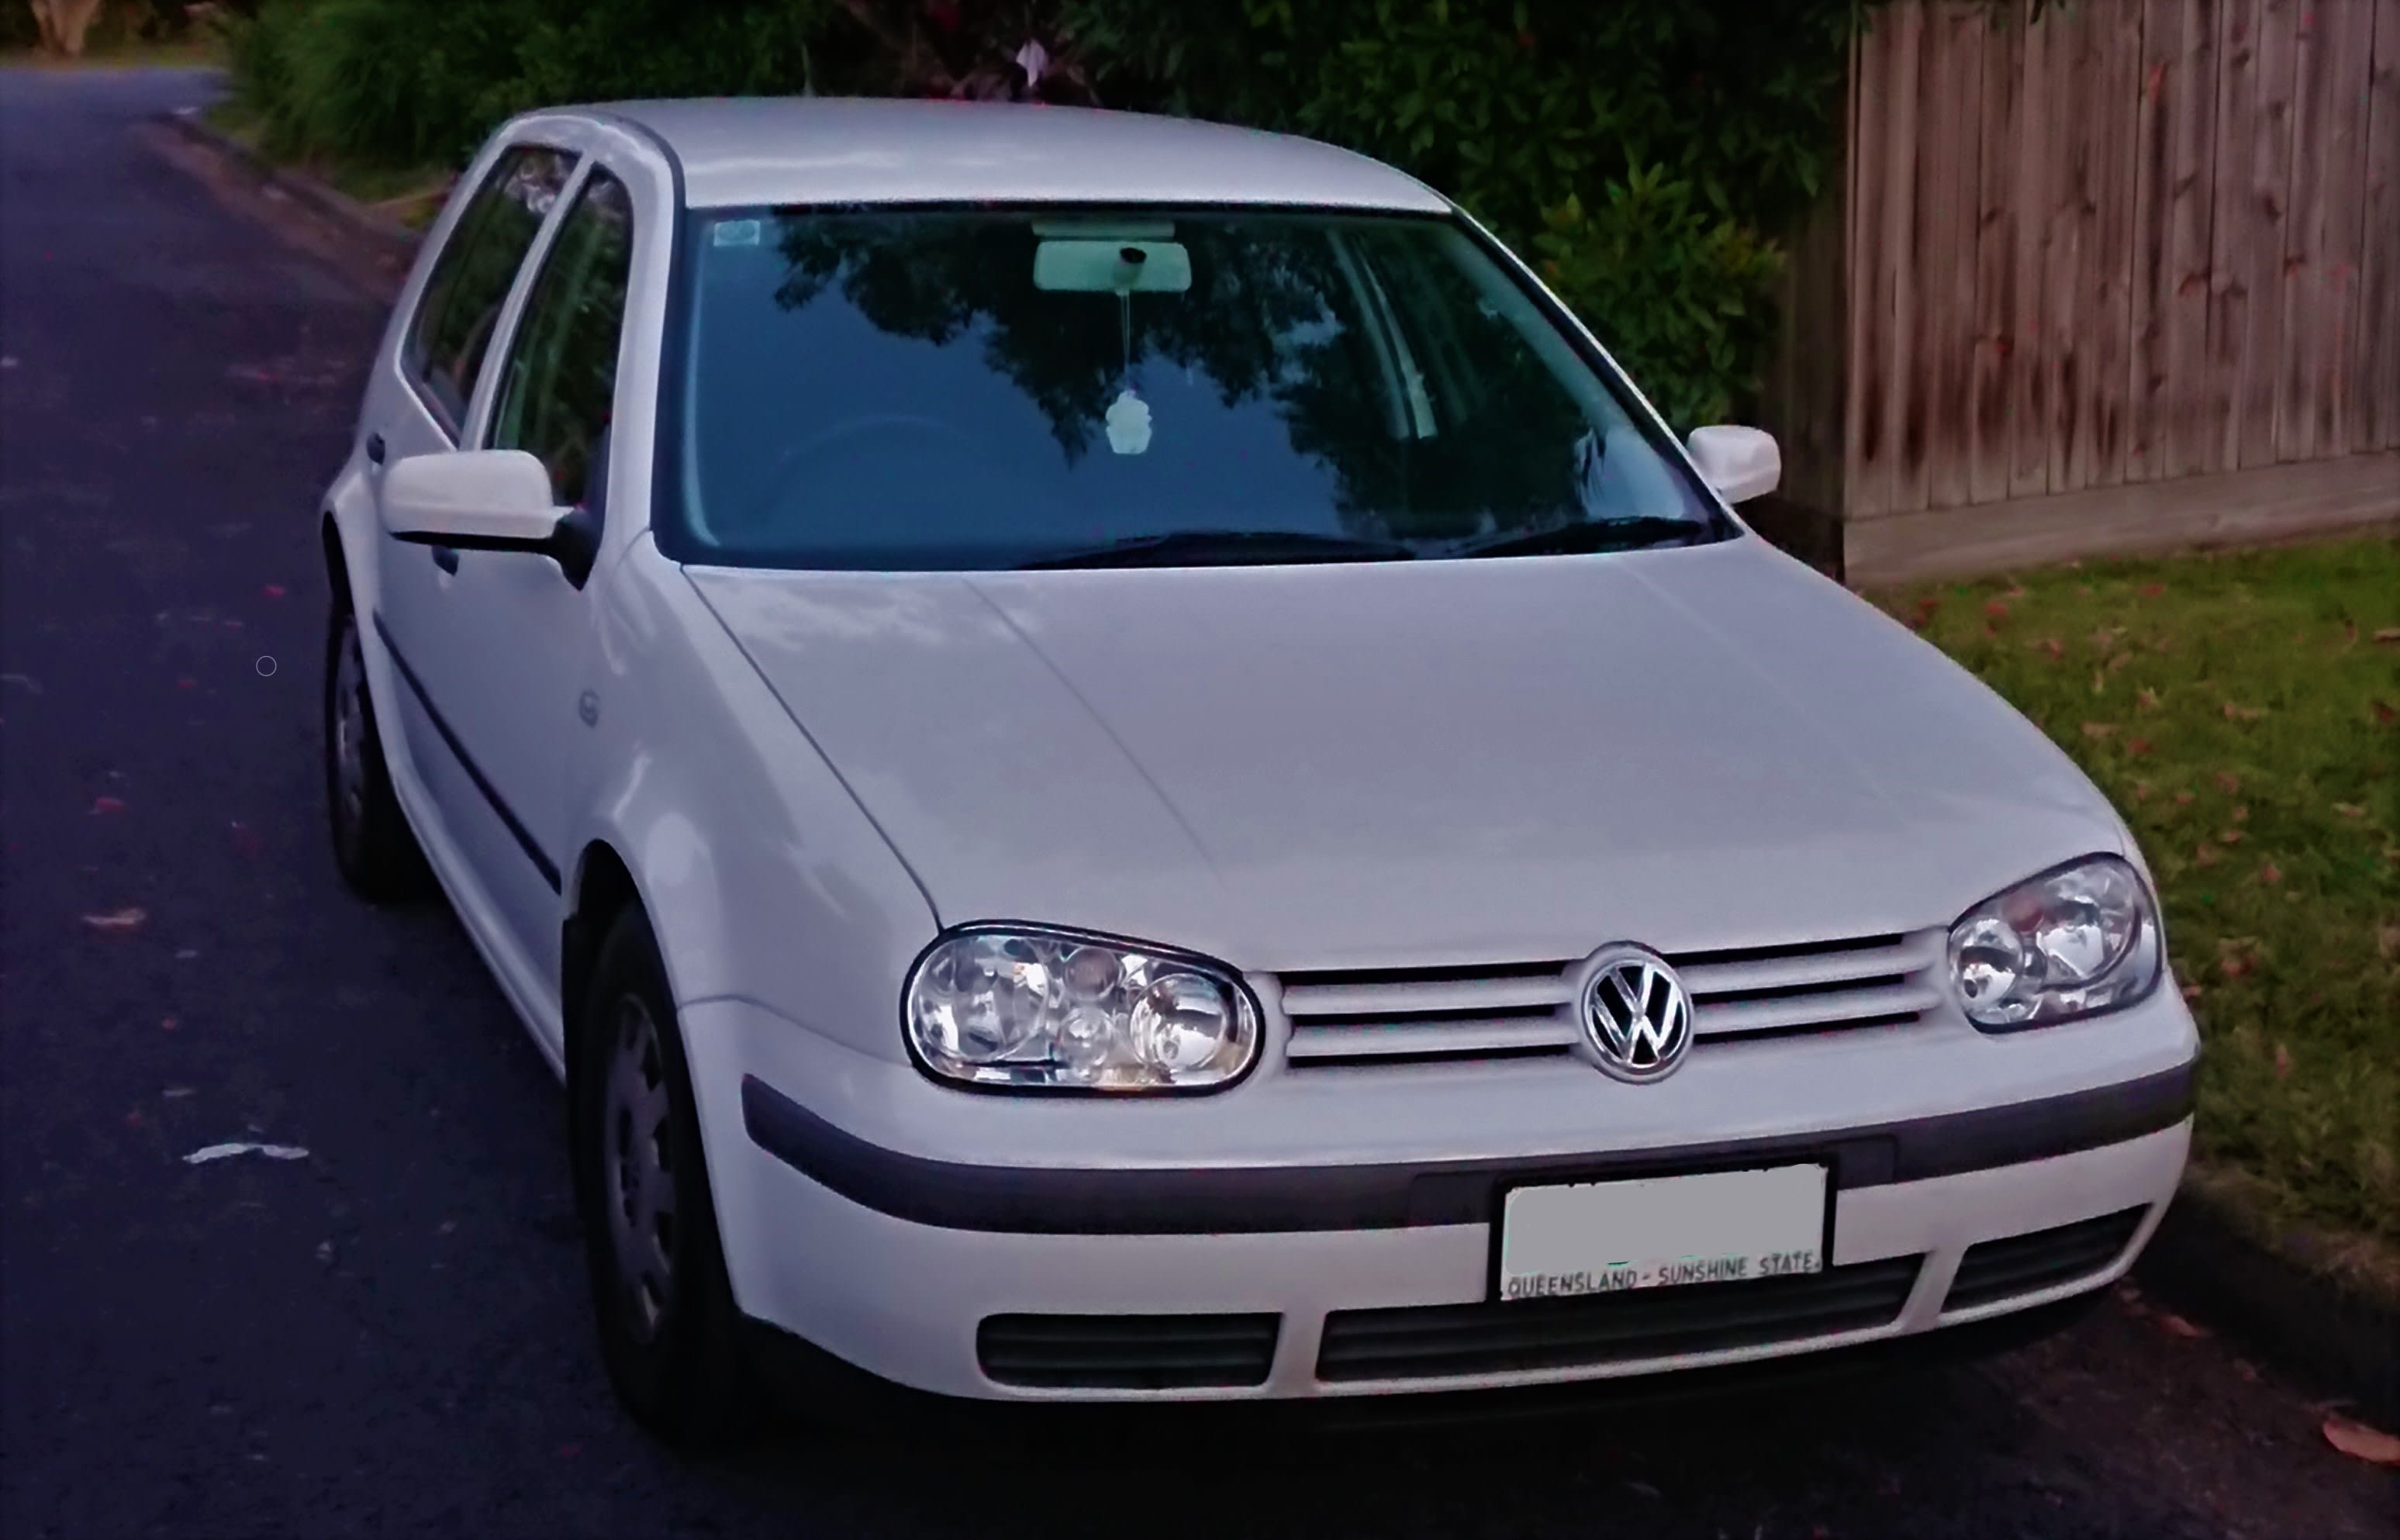 2001 Volkswagen Golf GL review - Drive